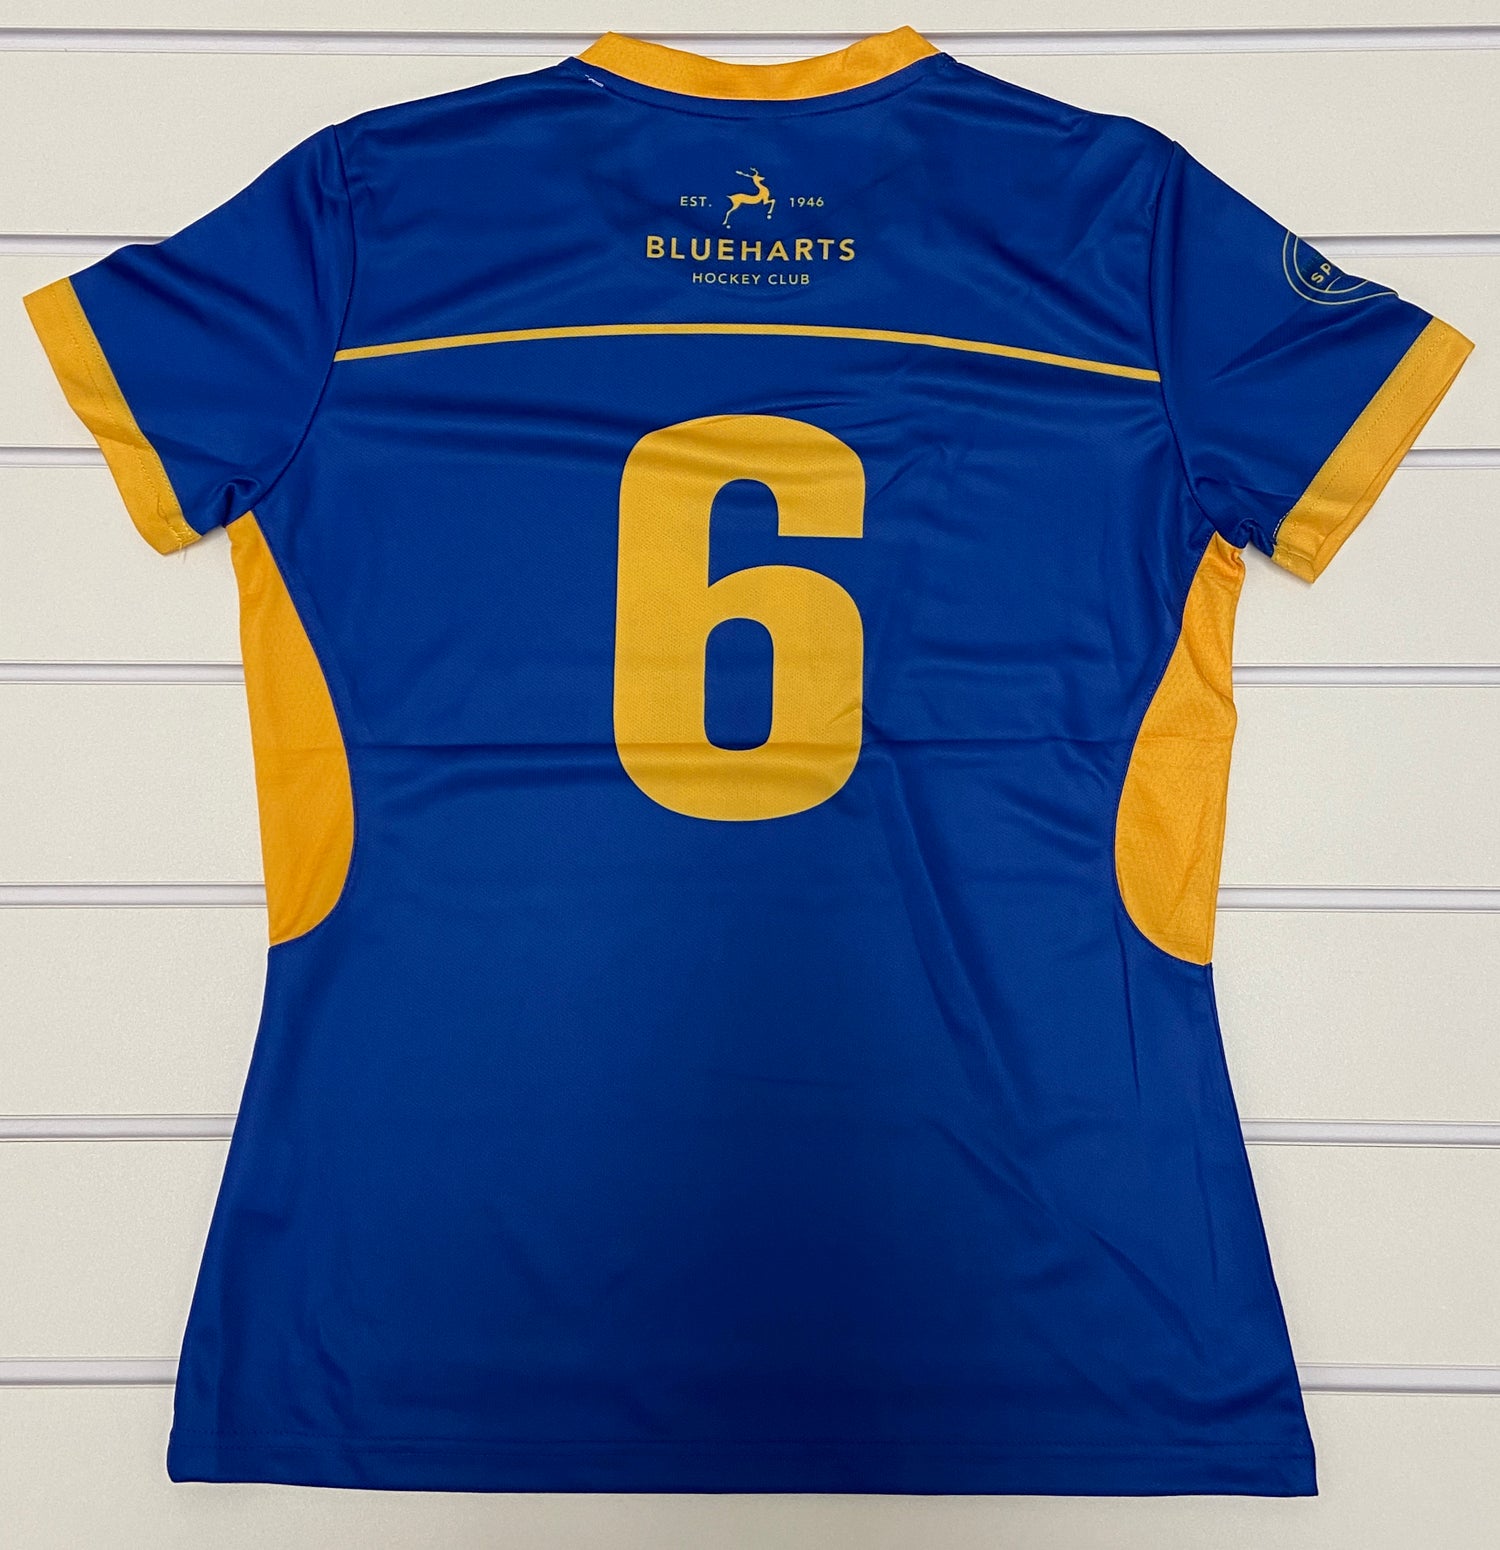 Blueharts Women's Home Playing Shirt (Medium, size 12-14)